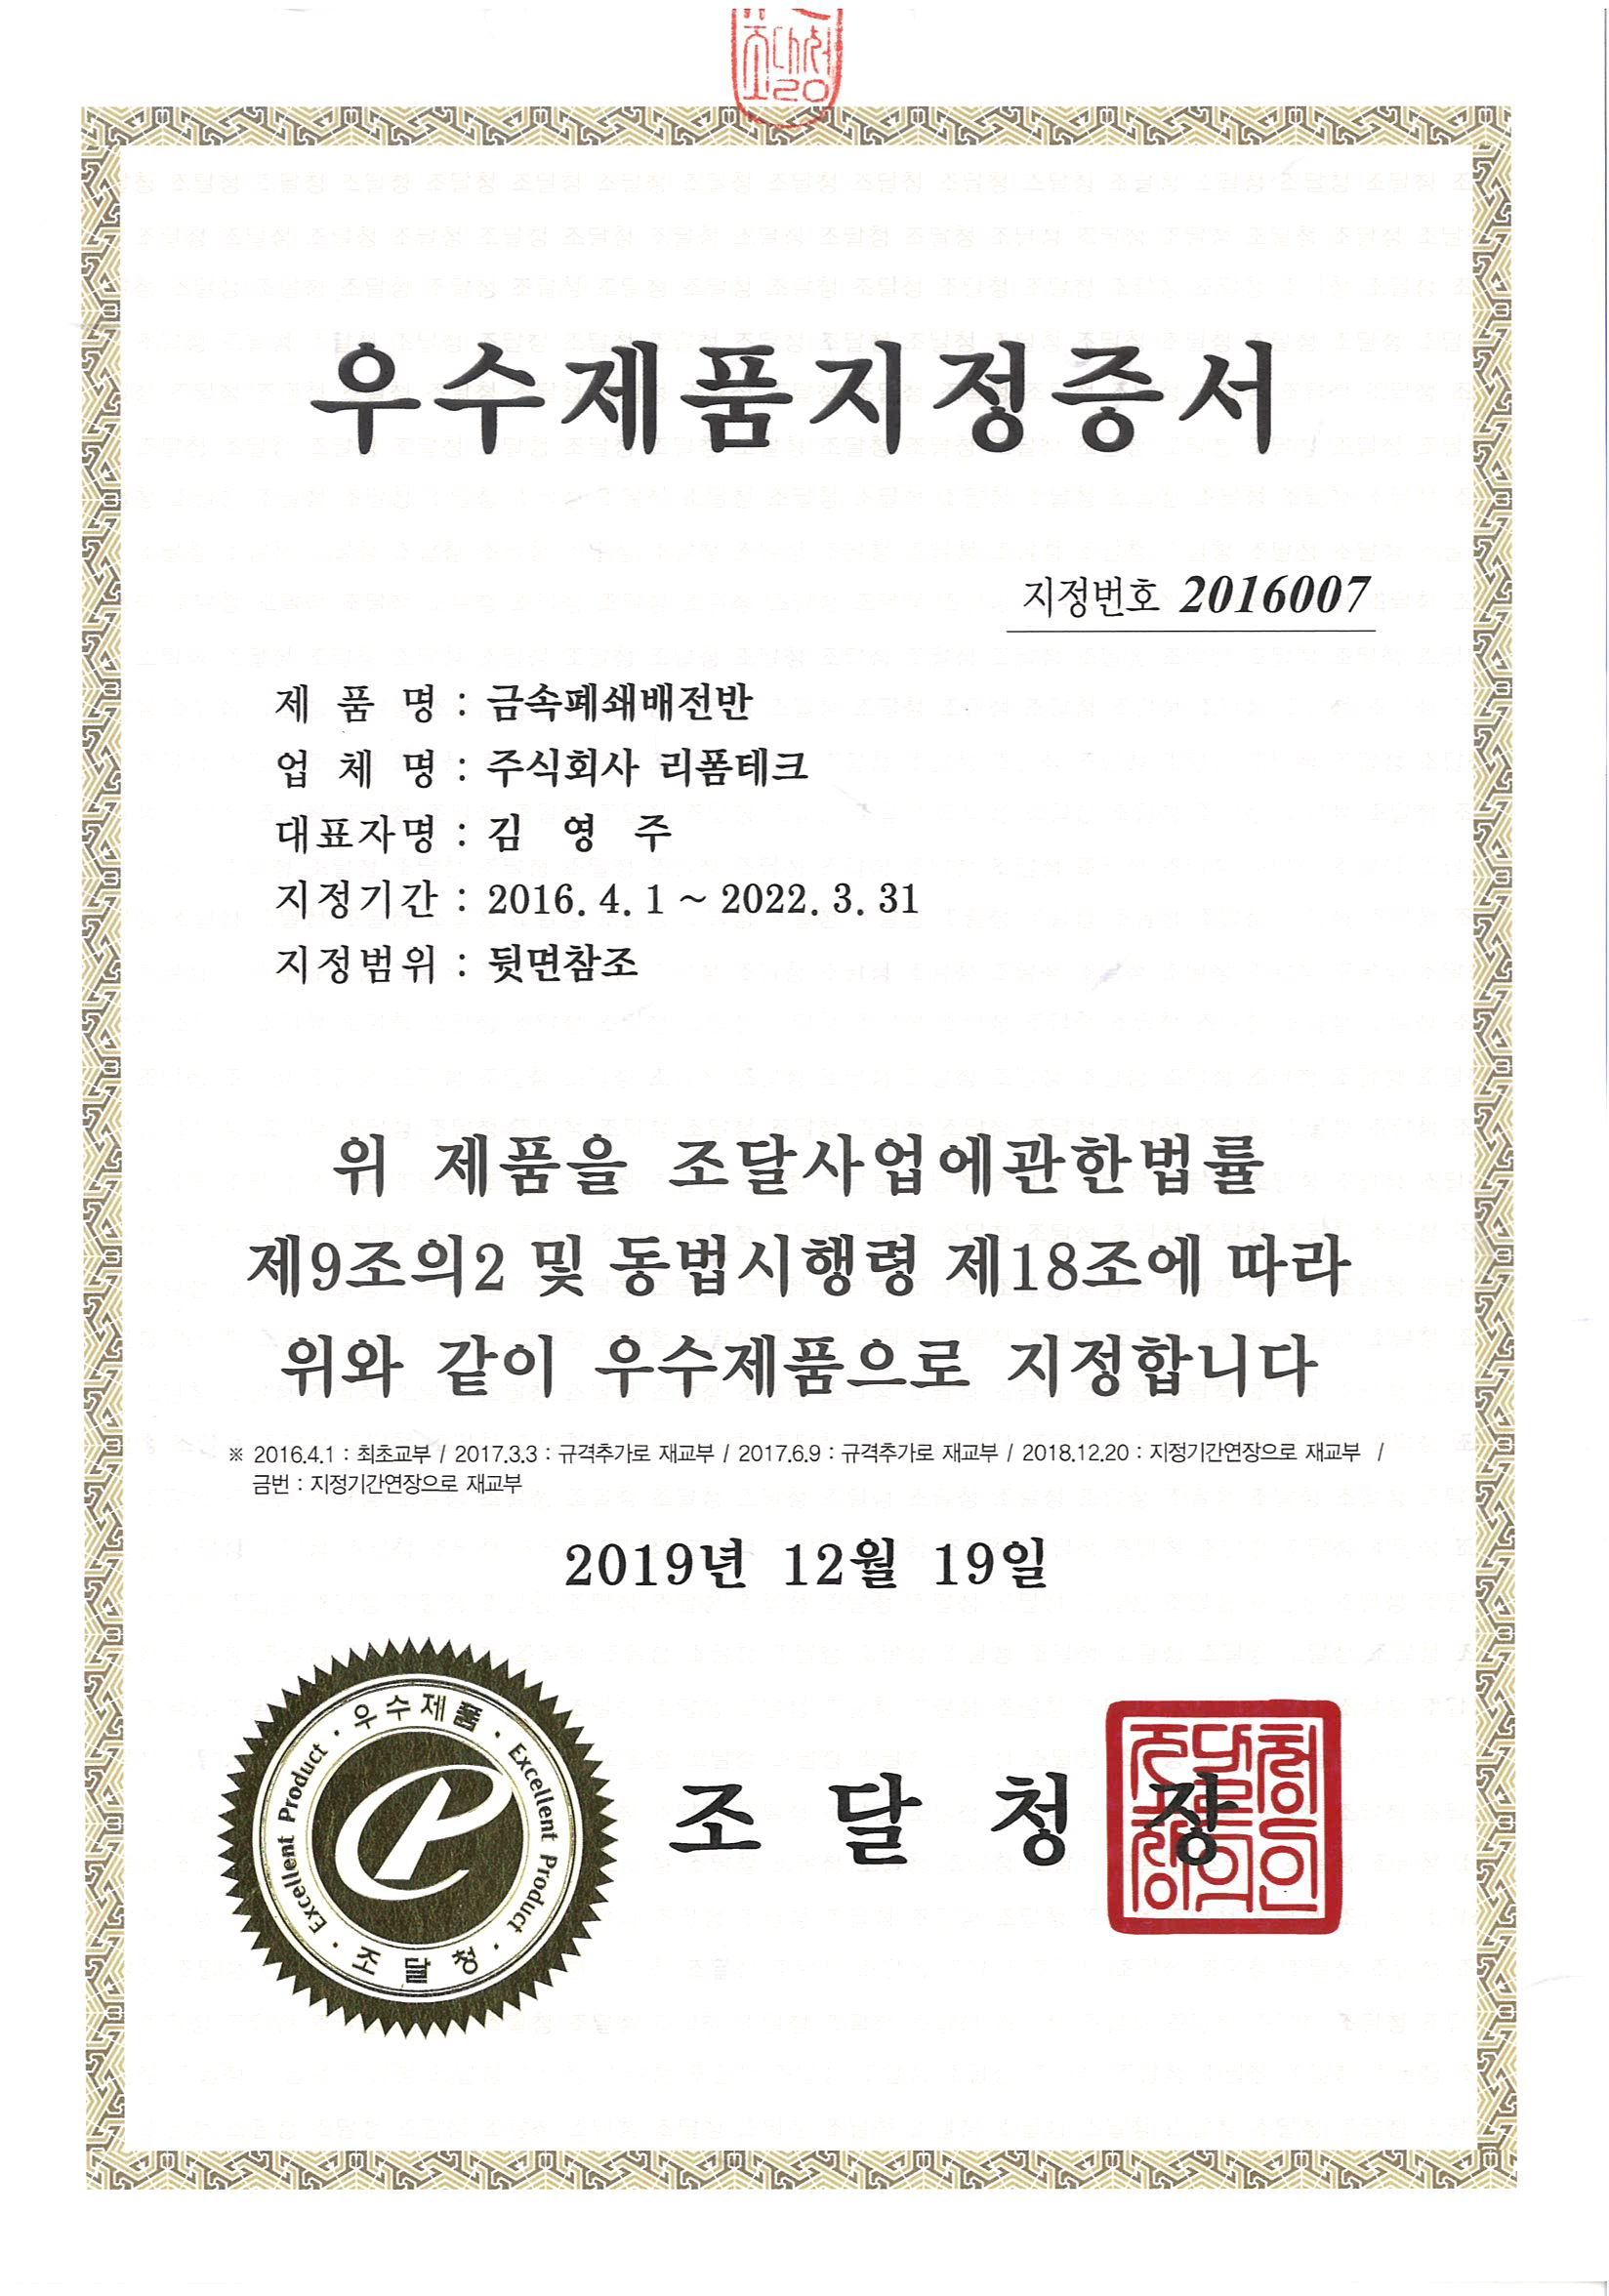 KAS Certificate